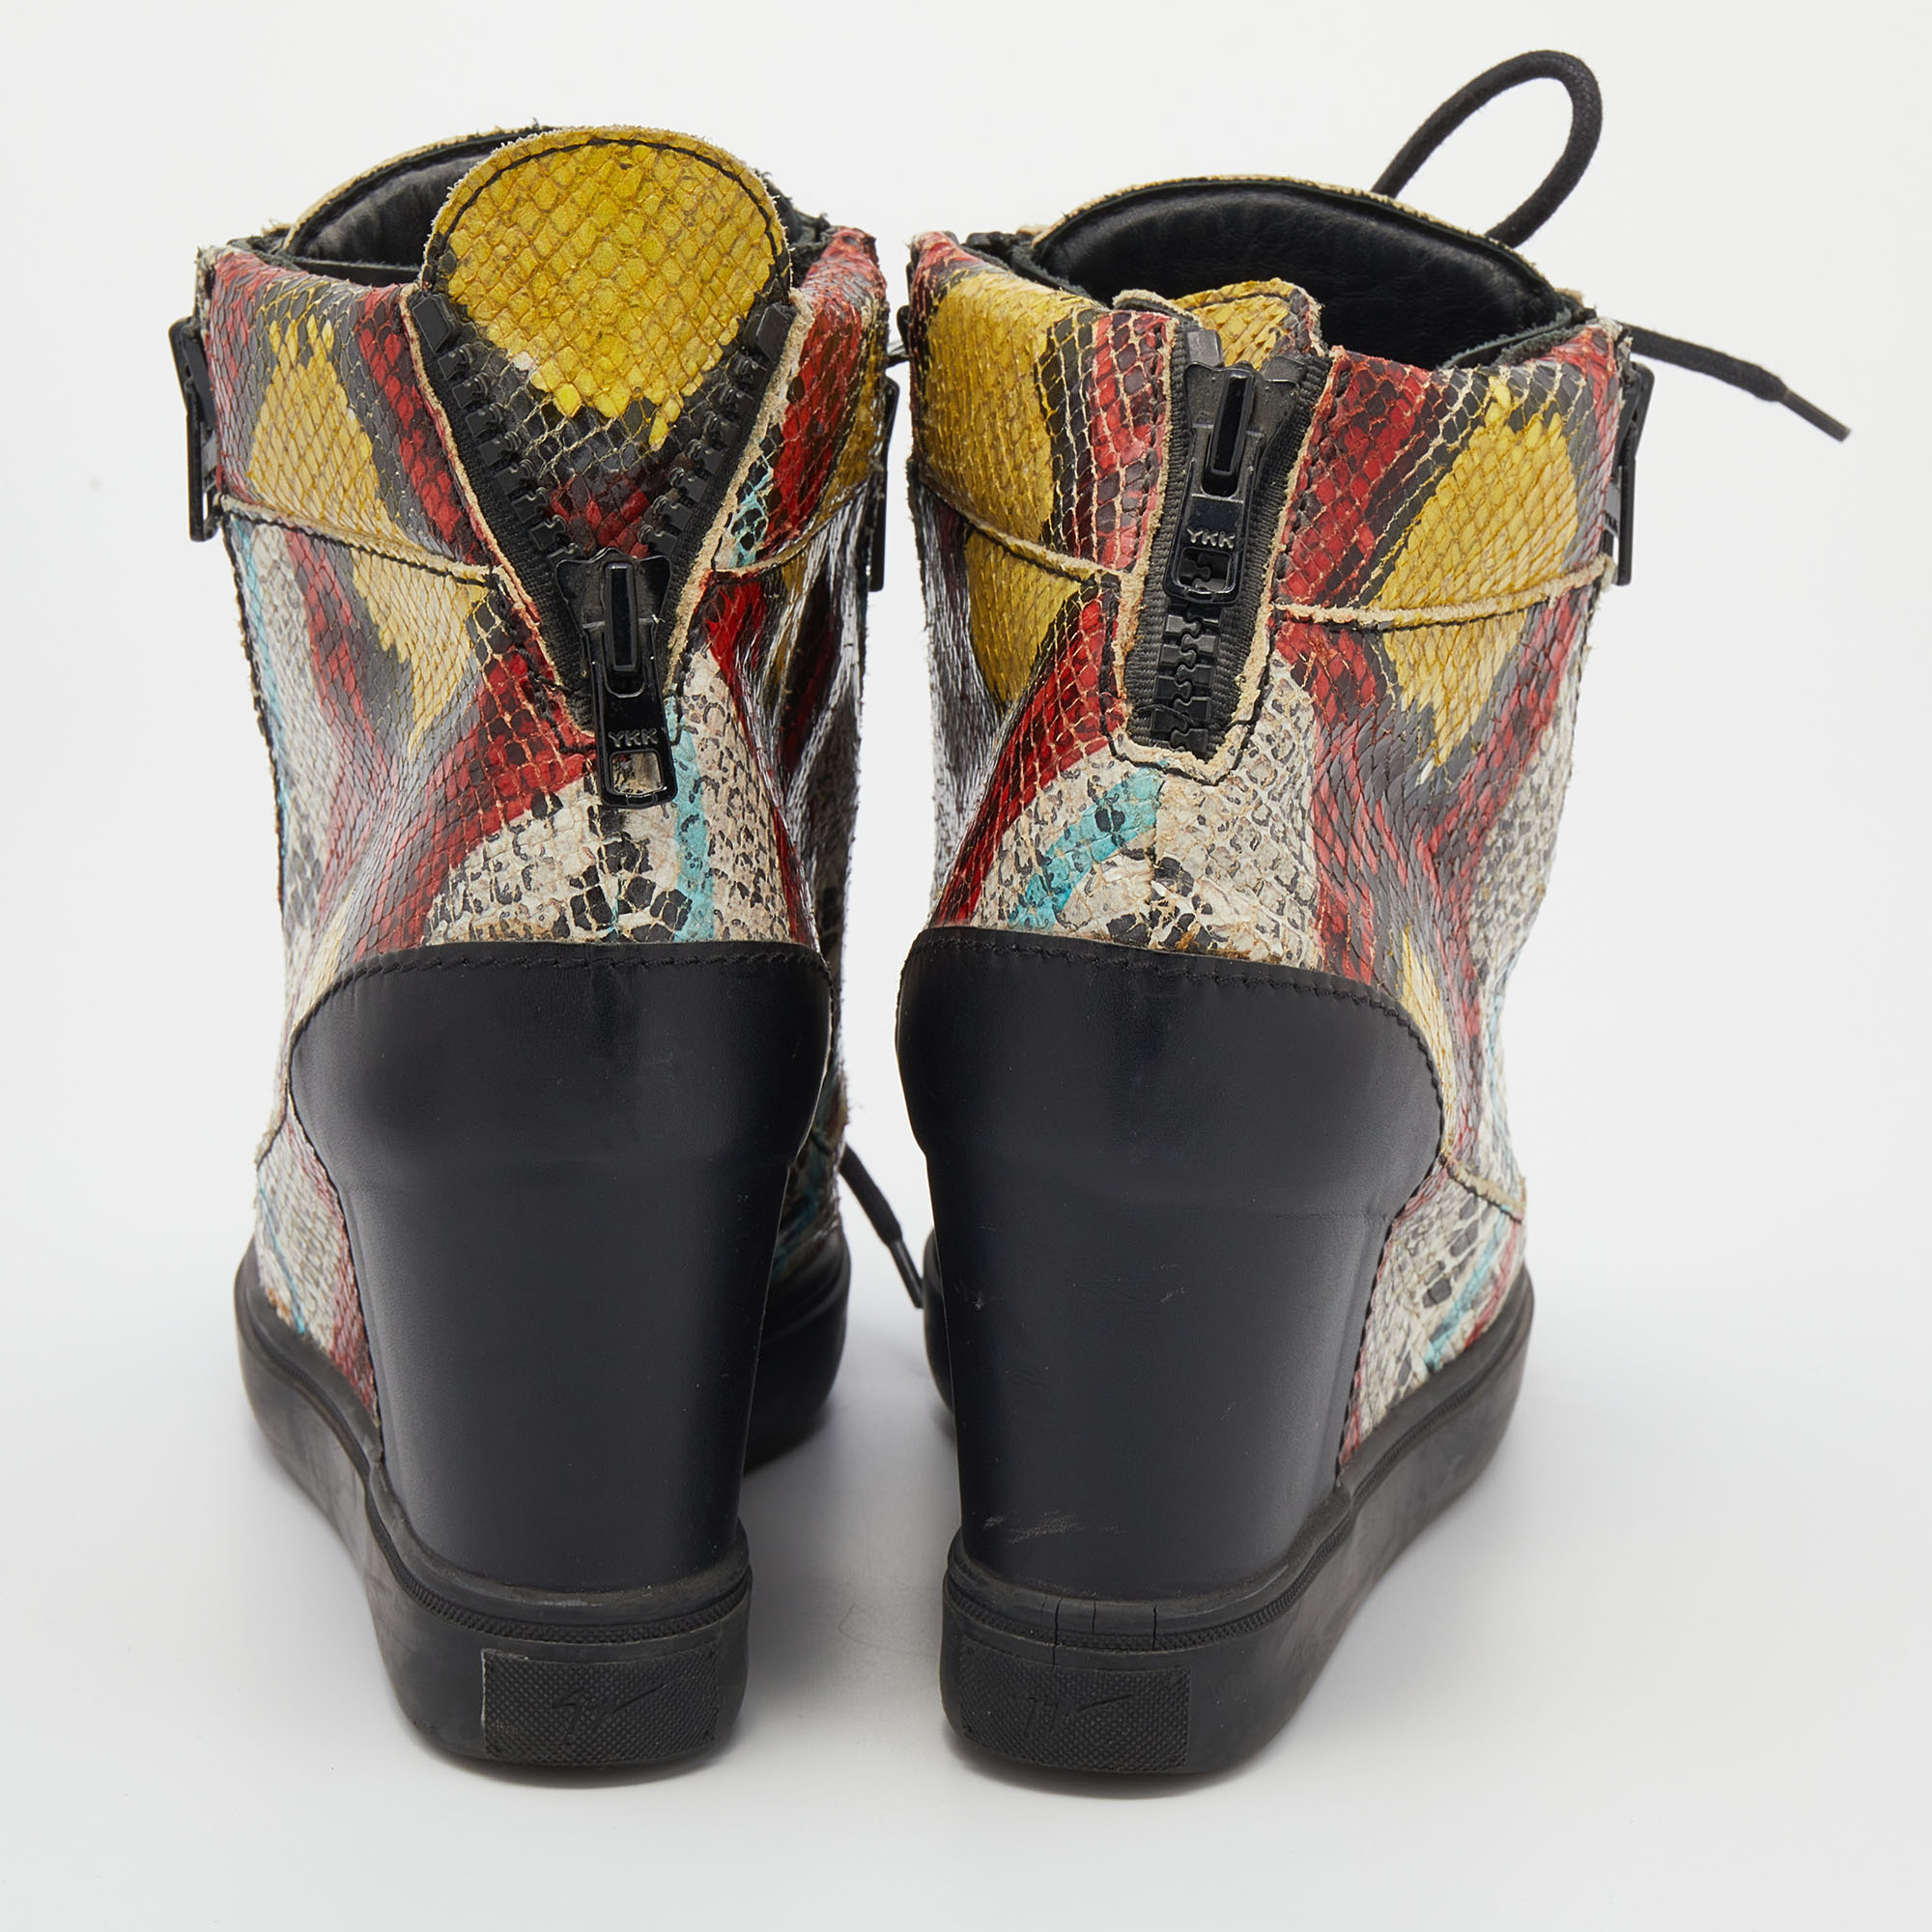 Giuseppe Zanotti Multicolor Snakeskin Embossed Leather High Toe Wedge Sneakers Size 39